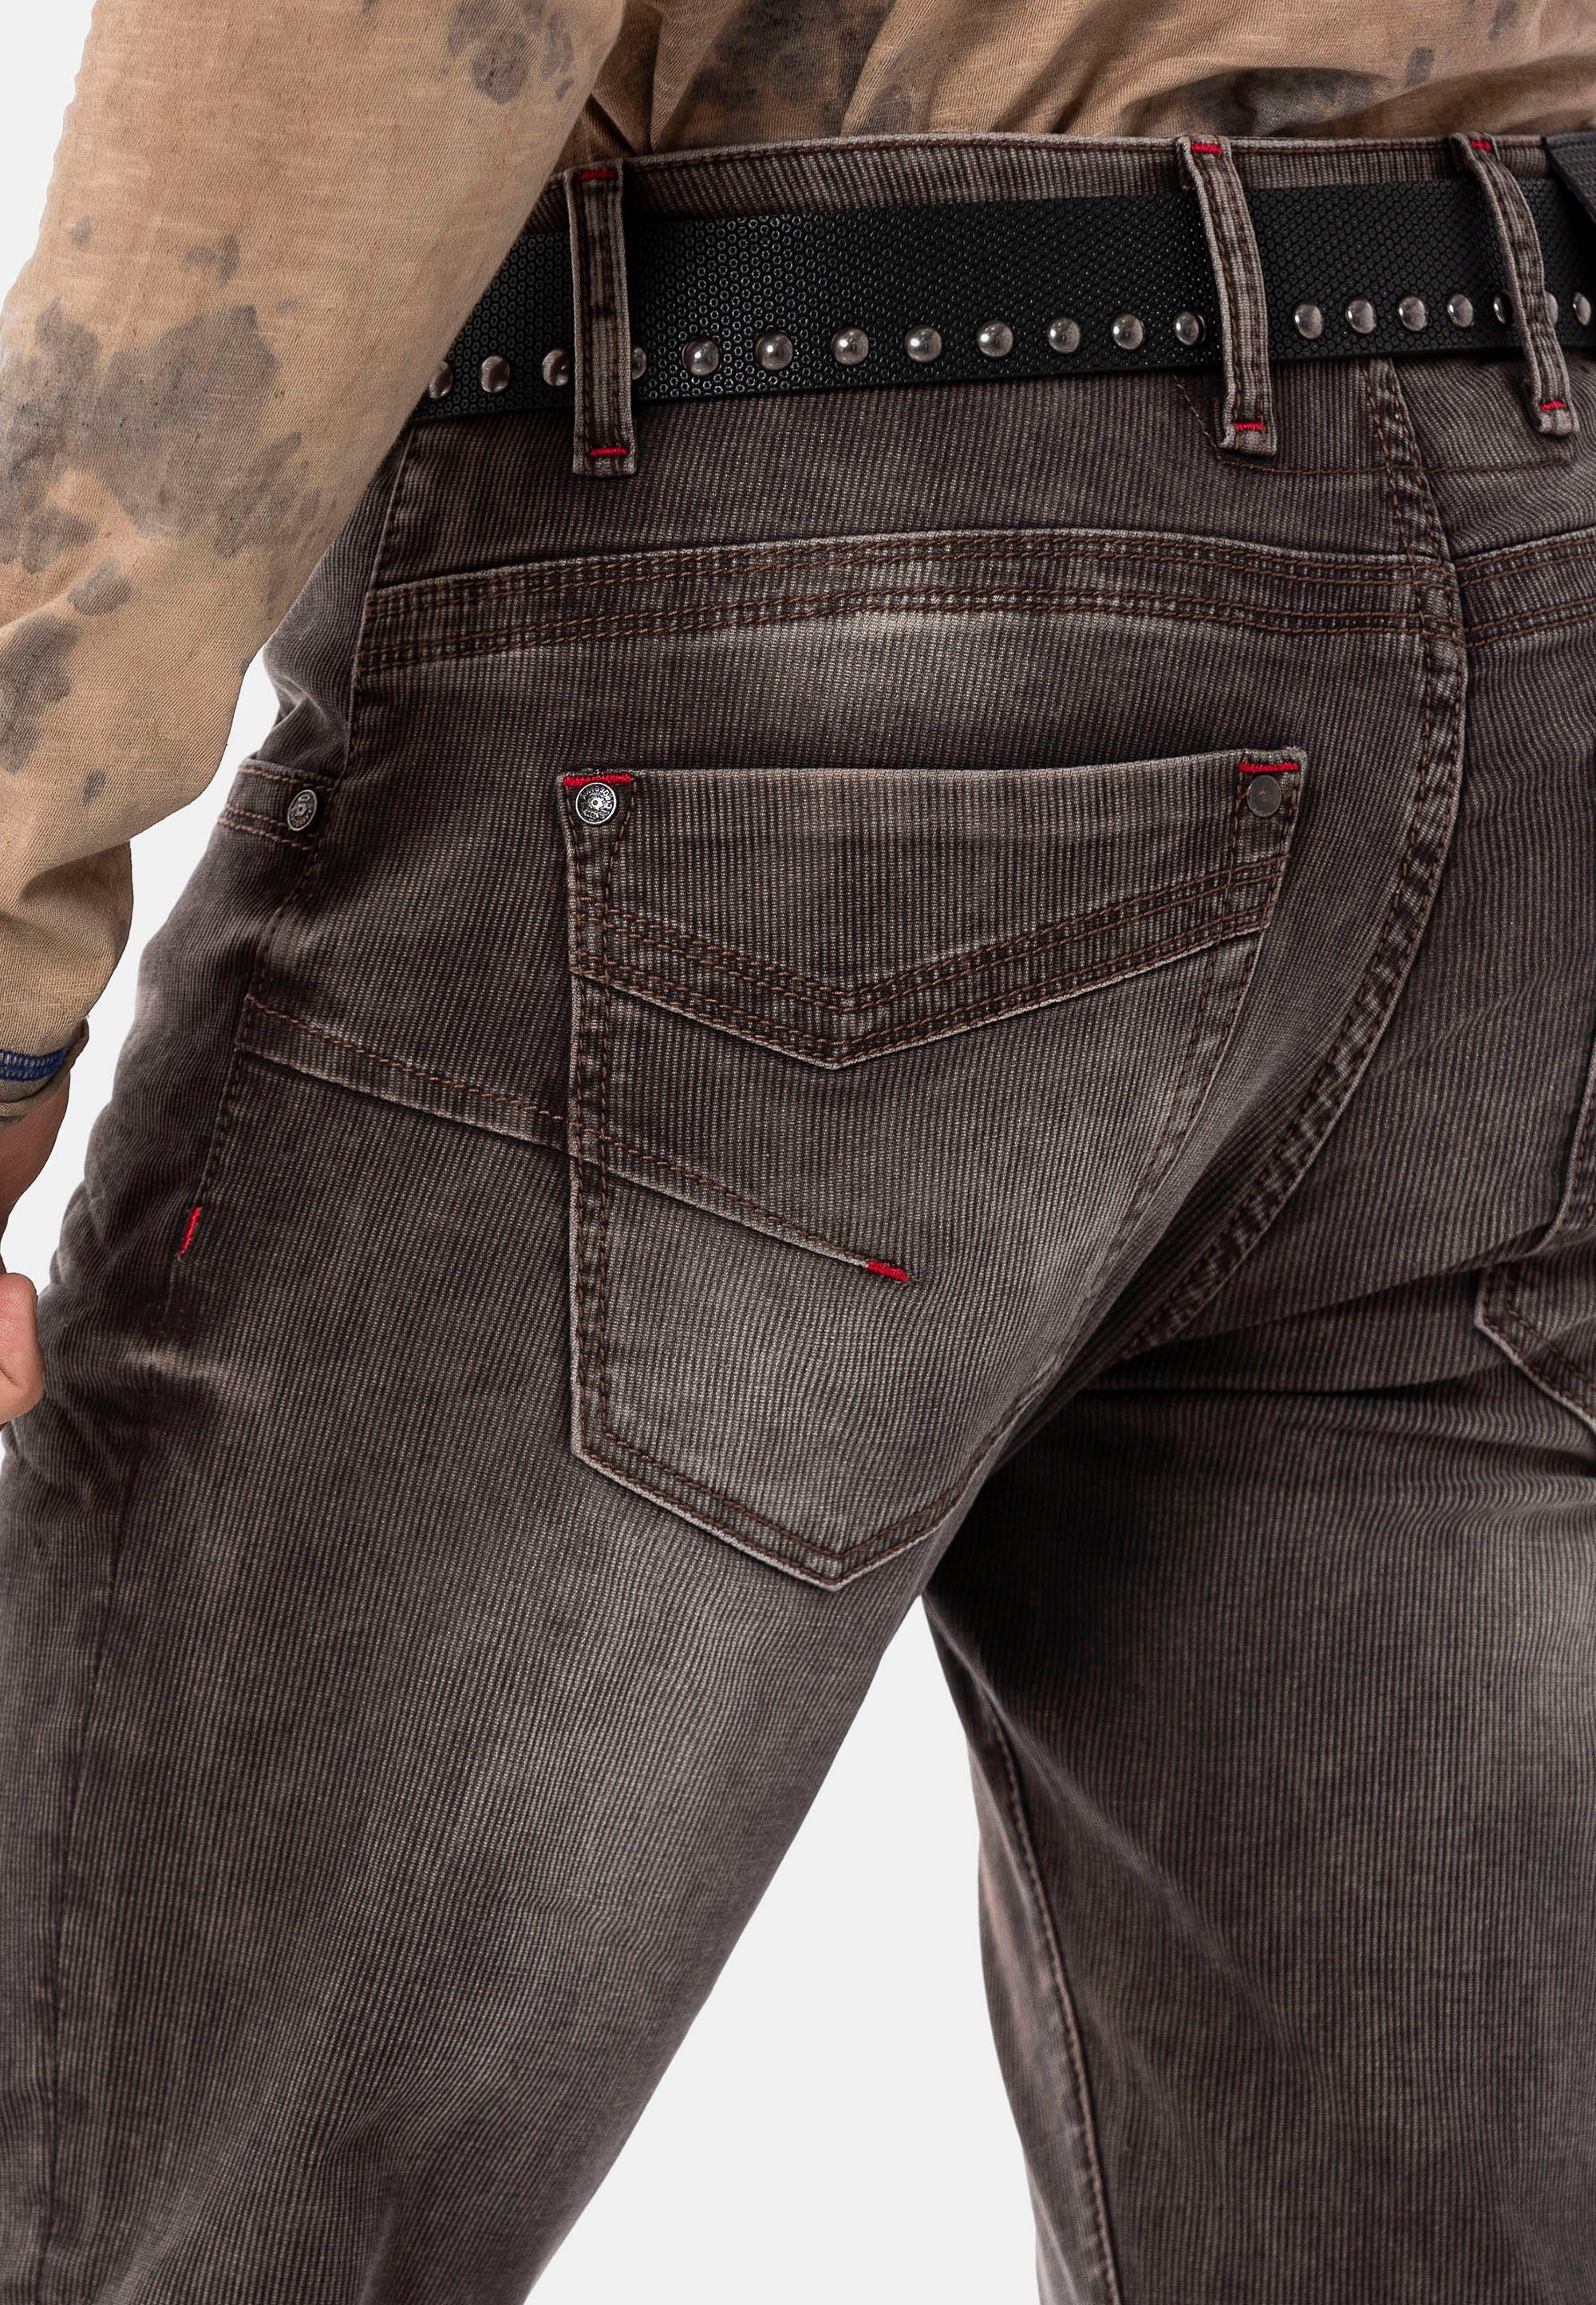 Cipo & Baxx in Straight-Jeans Cord-Design stilvollem braun